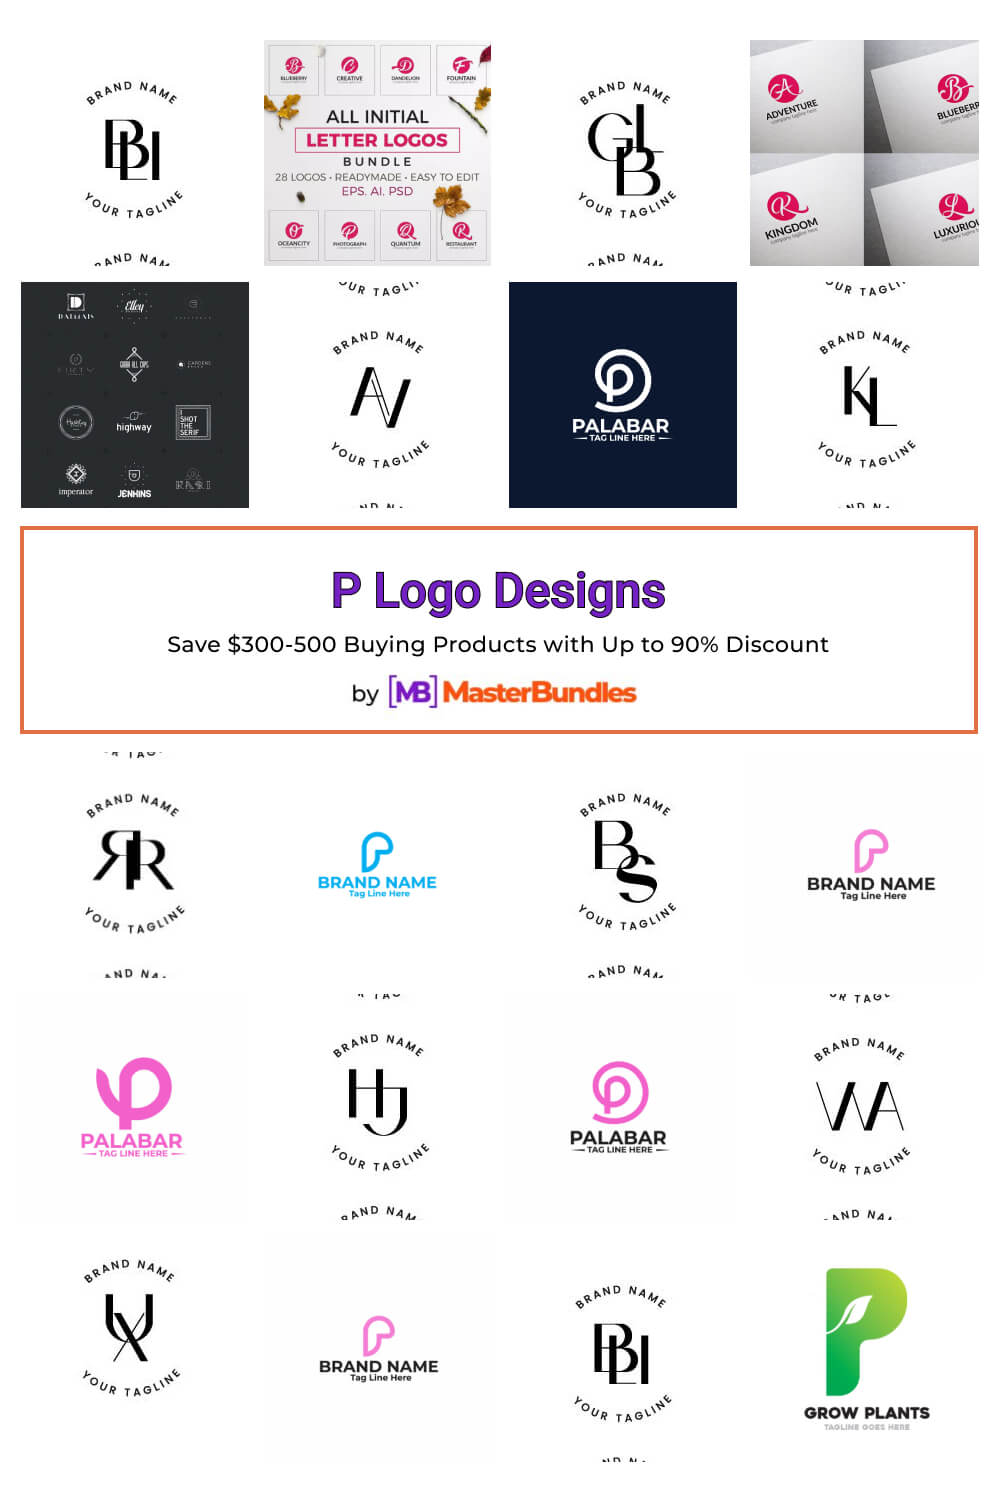 p logo designs pinterest image.